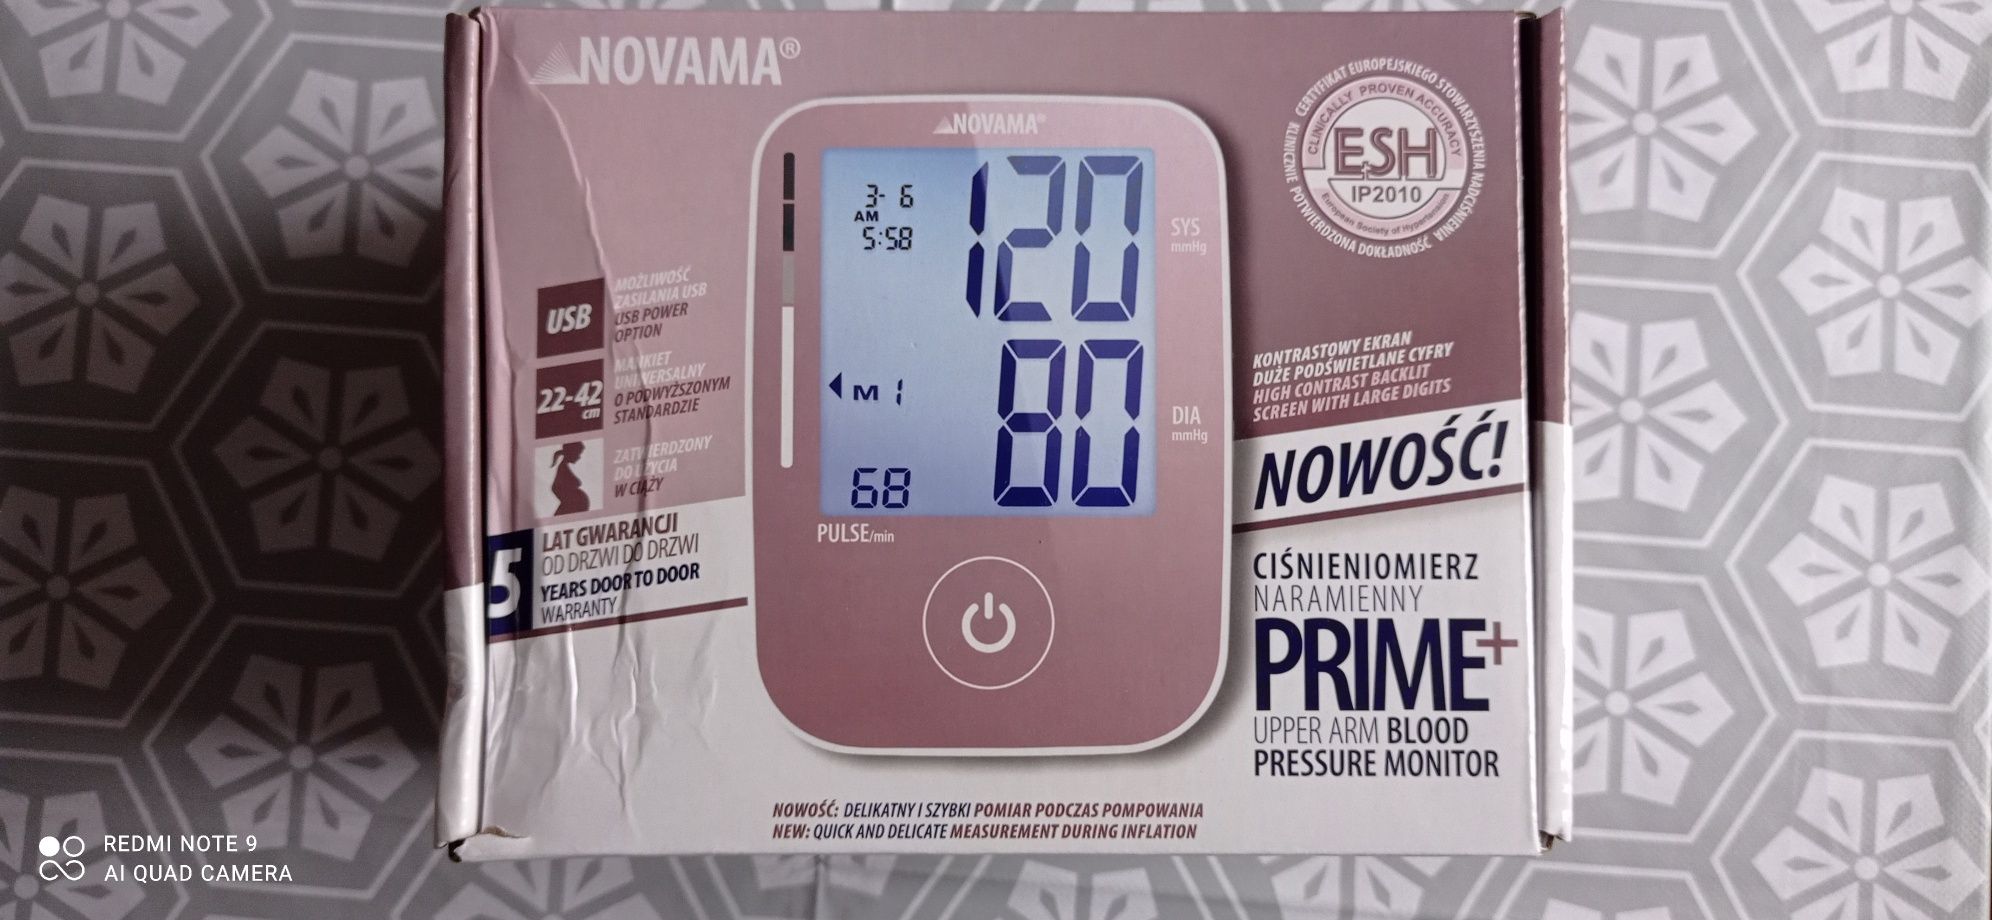 Novama Prime+ Pink Ciśnieniomierz naramienny z ESH i IHB